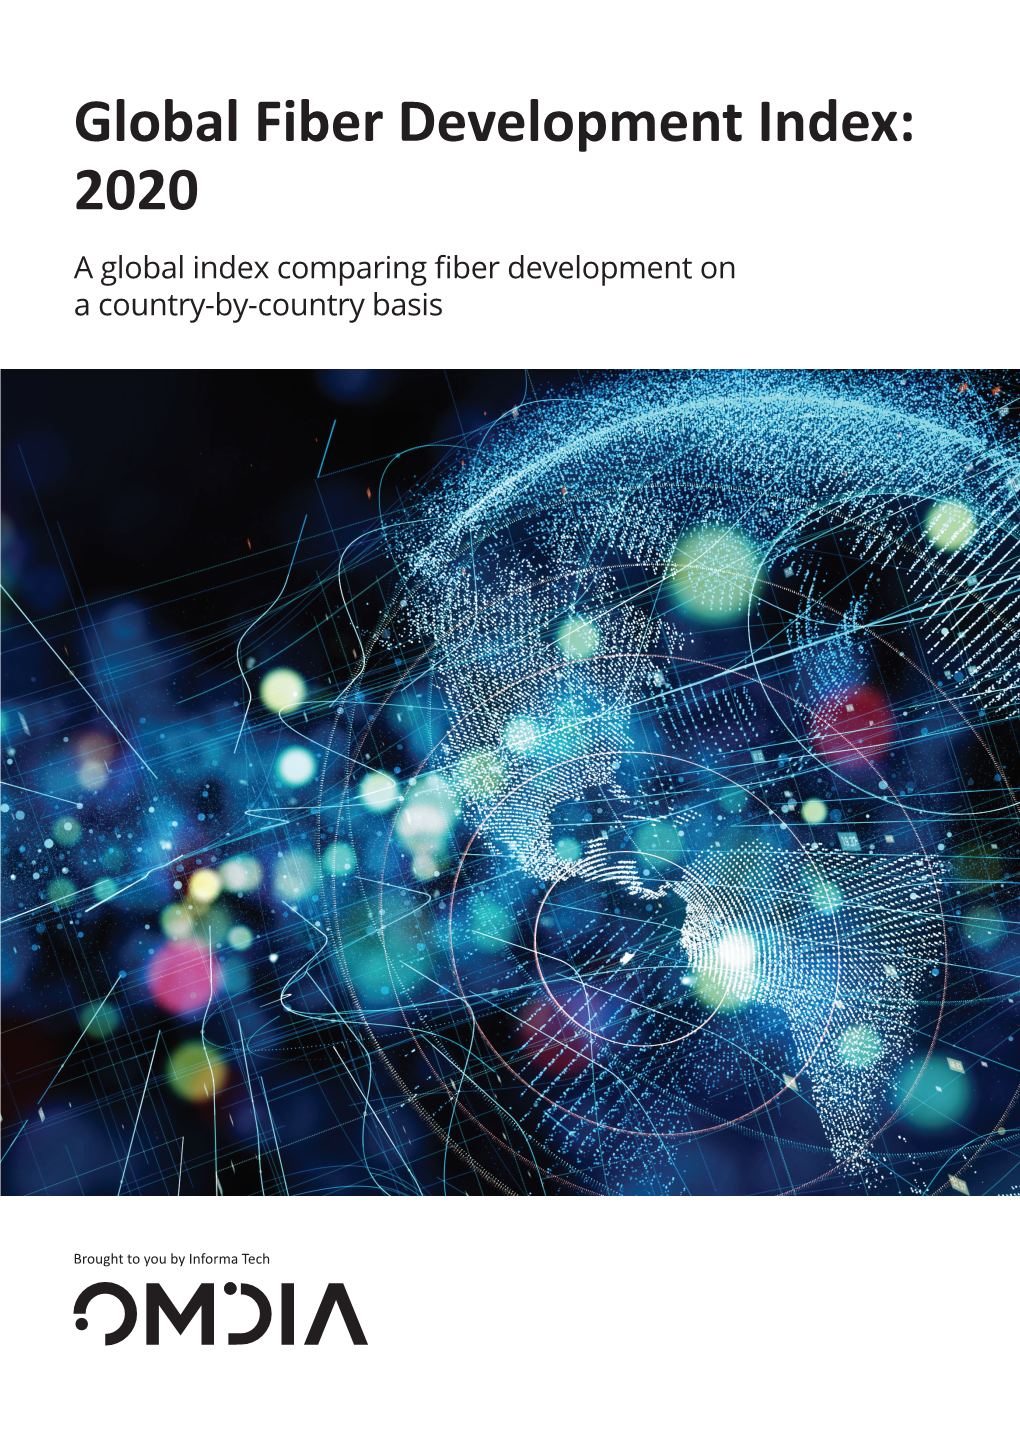 Global Fiber Development Index: 2020 a Global Index Comparing Fiber Development on a Country-By-Country Basis